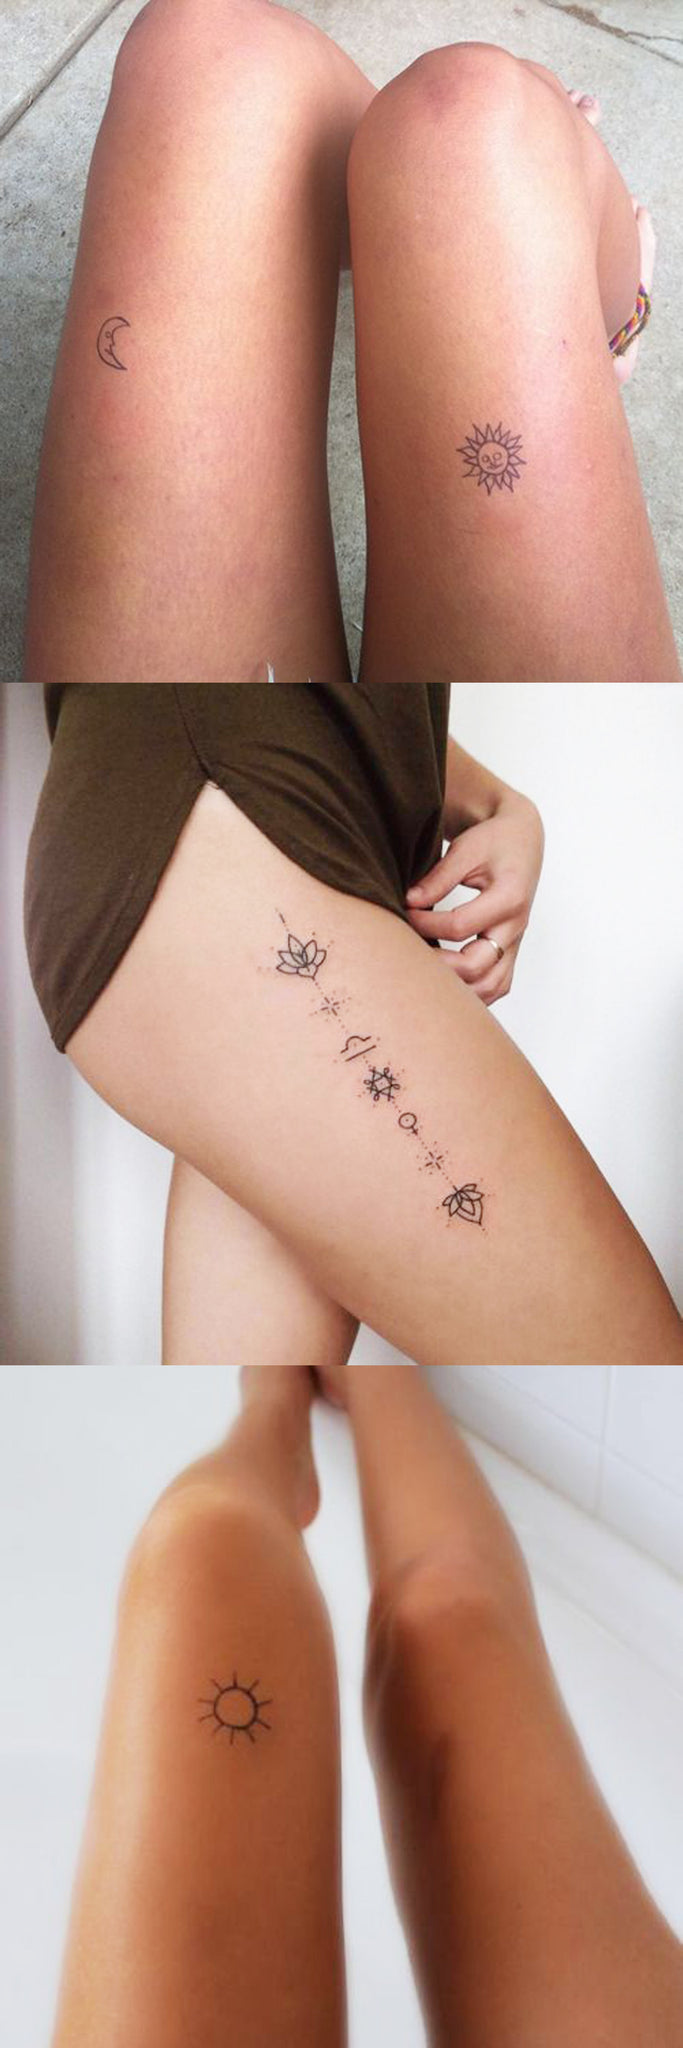 Minimalist Thigh Tattoo Ideas for Women - Sun and Moon Leg Tatt - Tribal Lotus Thigh Tat at MyBodiArt.com